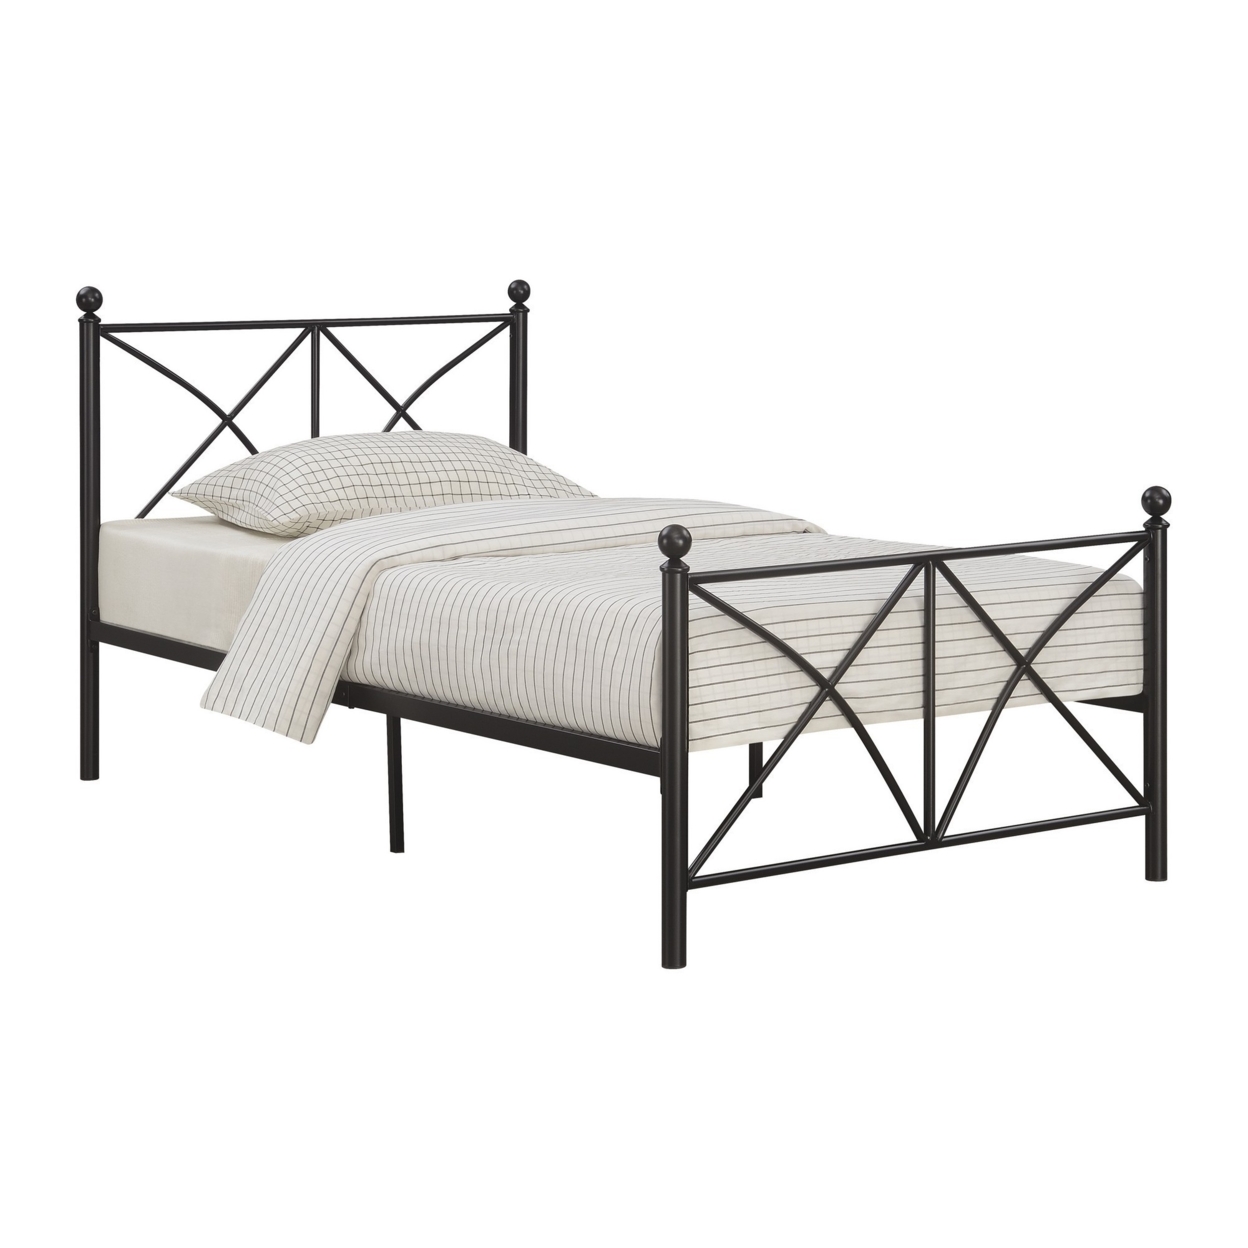 Adam 79 Inch Metal Full Size Bed Frame, Crossed Bars, Matte Black